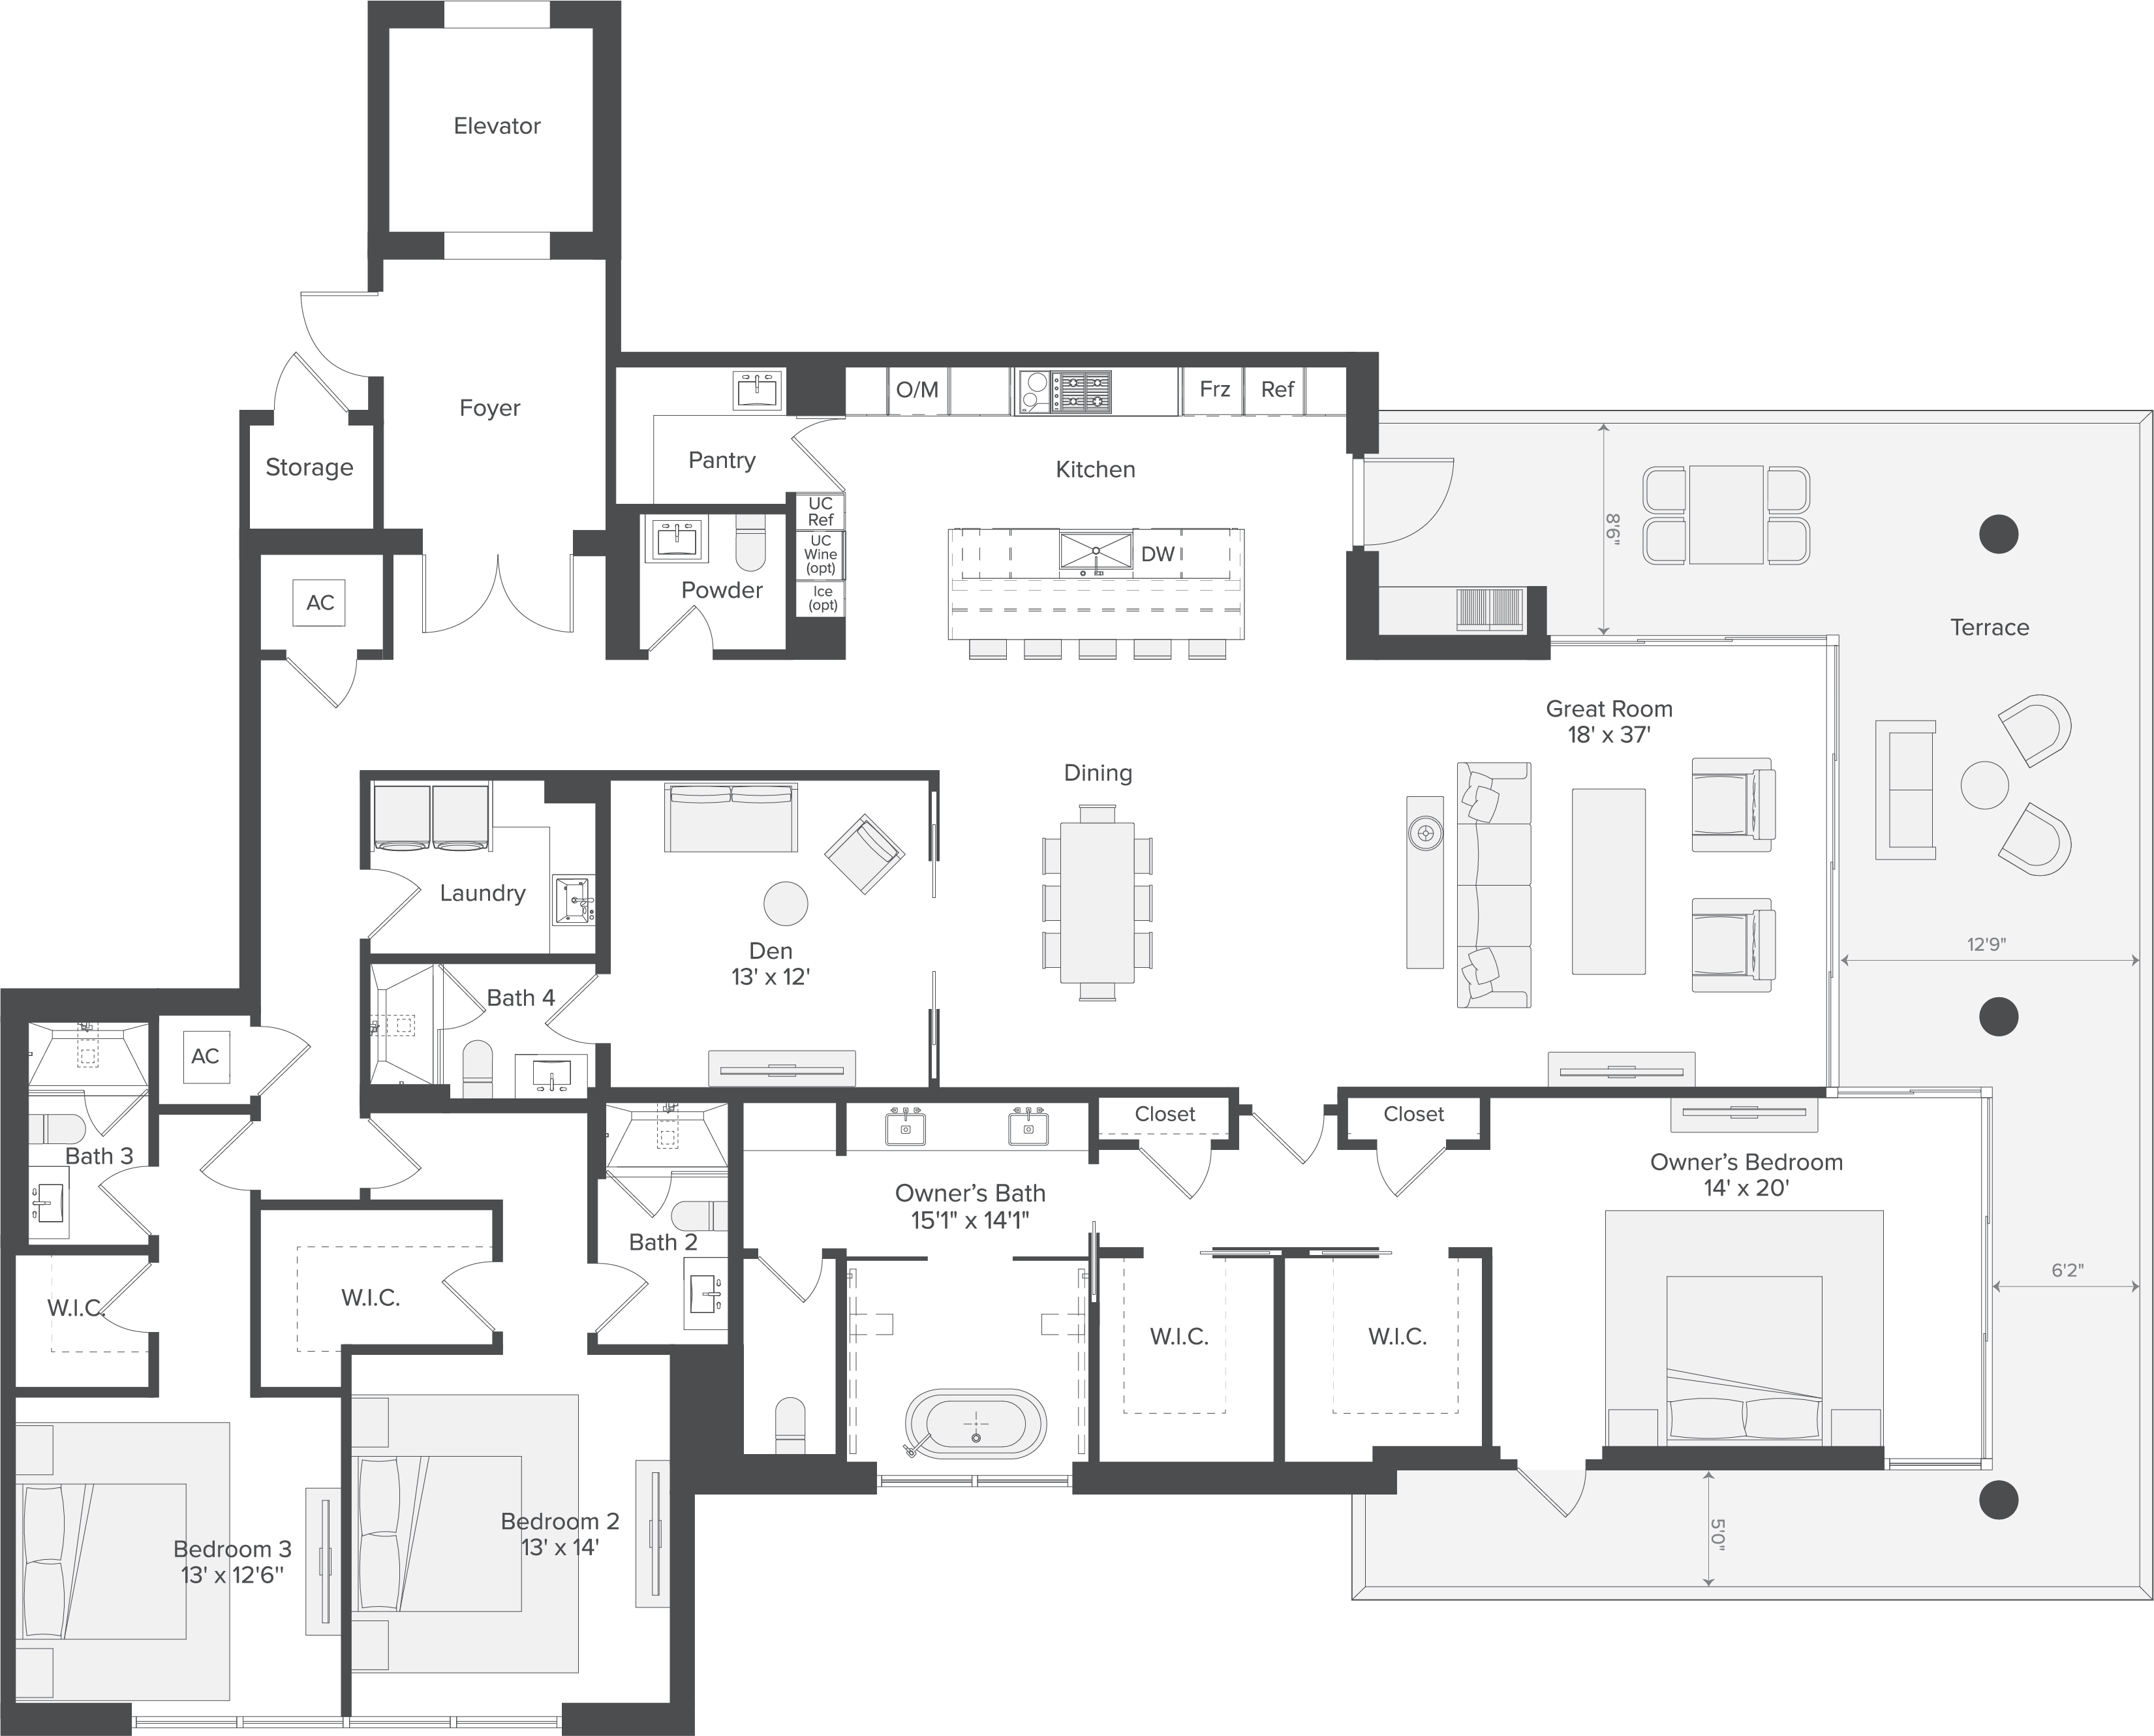 Penthouse 03 - Floorplan Image